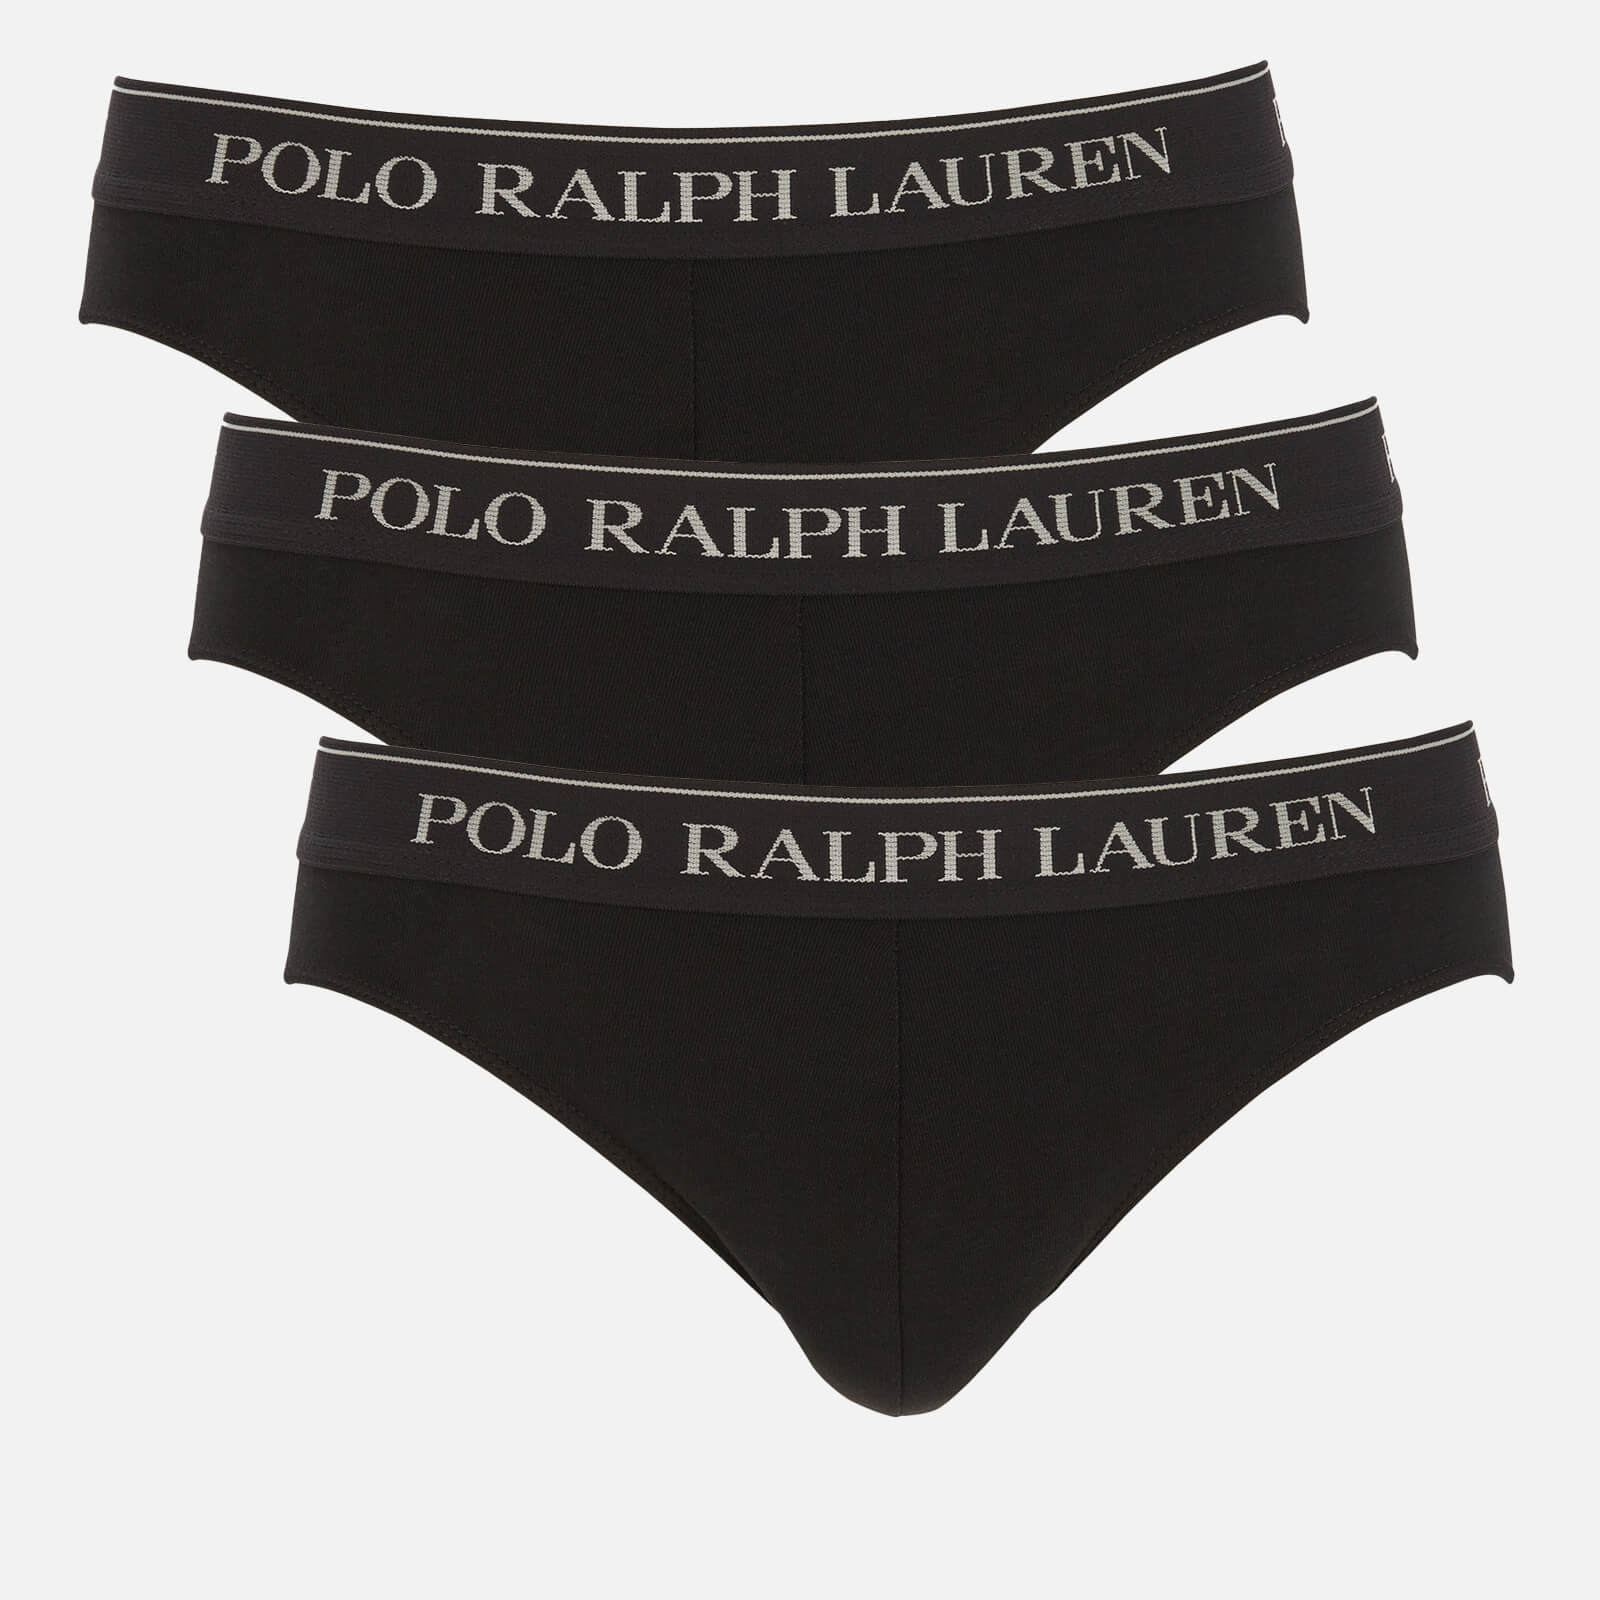 Polo Ralph Lauren Men's 3 Pack Briefs - Black/Multi Waistband